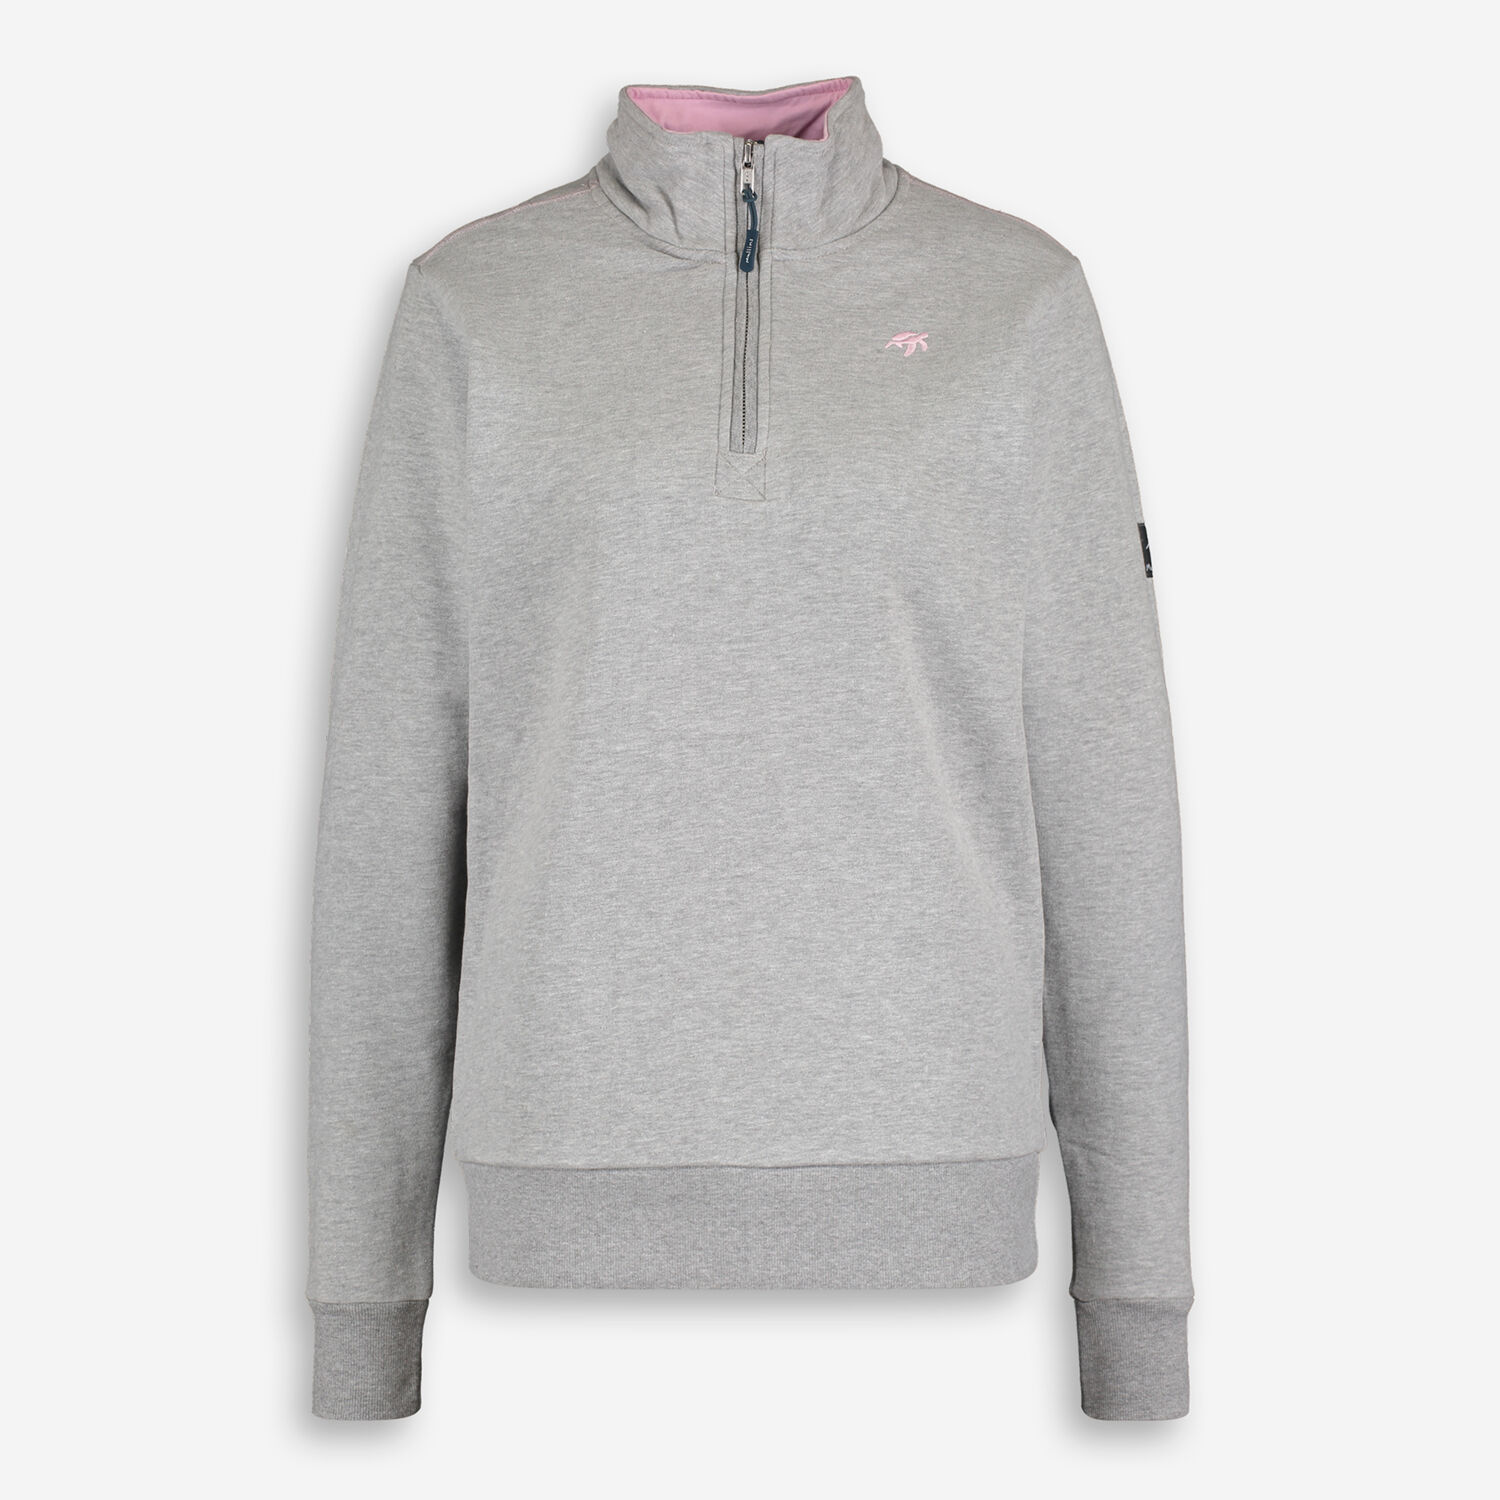 Grey Quarter Zip Sweatshirt - TK Maxx UK